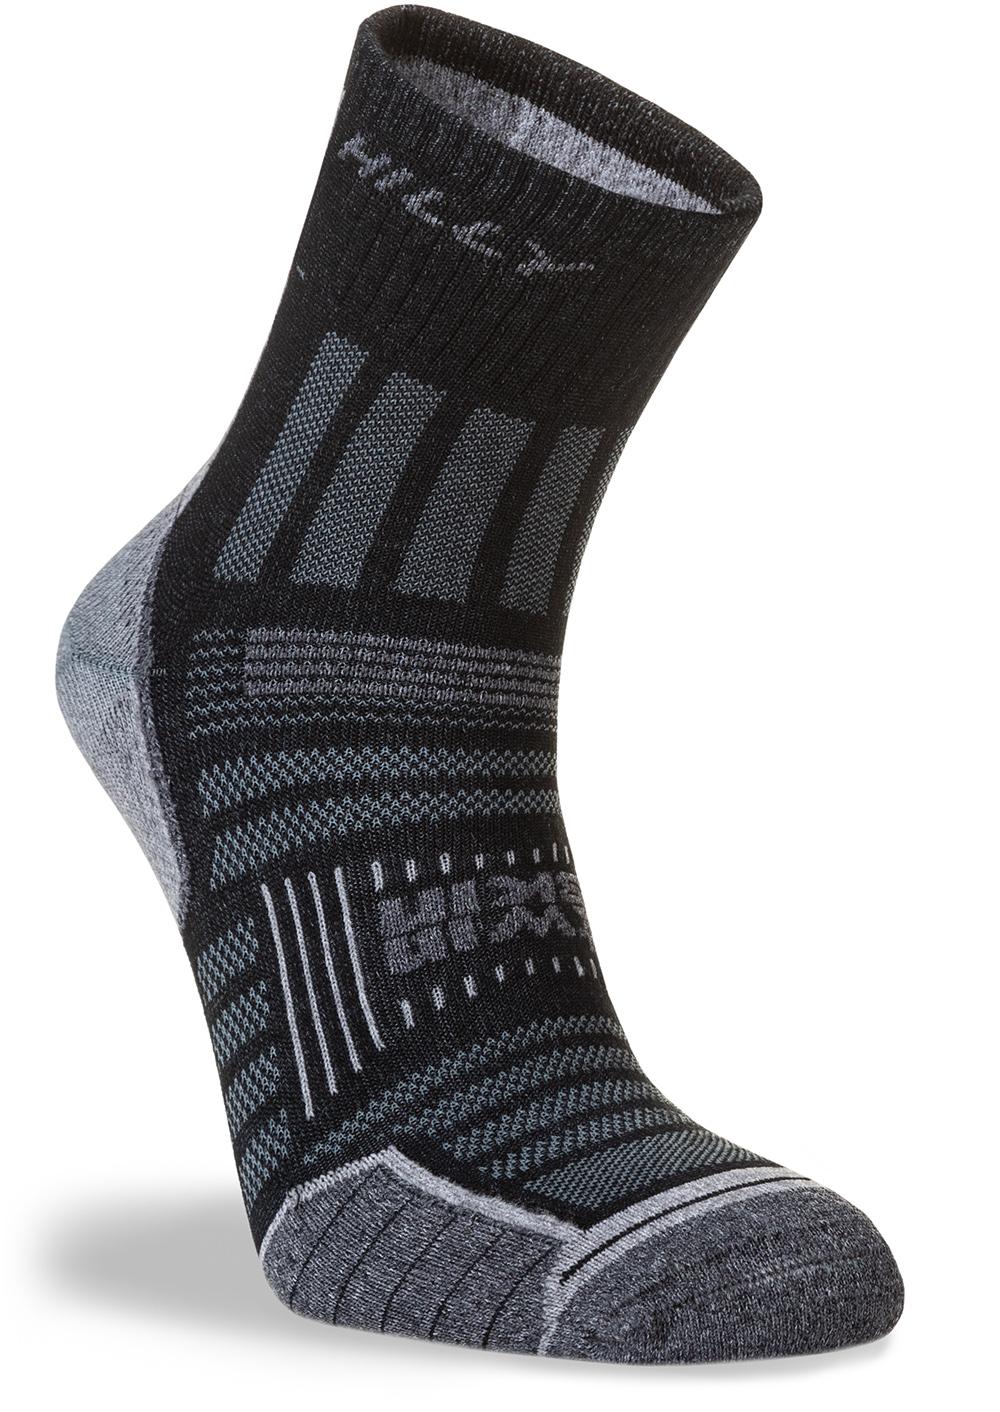 Hilly Twin Skin Anklet Sock - Black/grey Marl